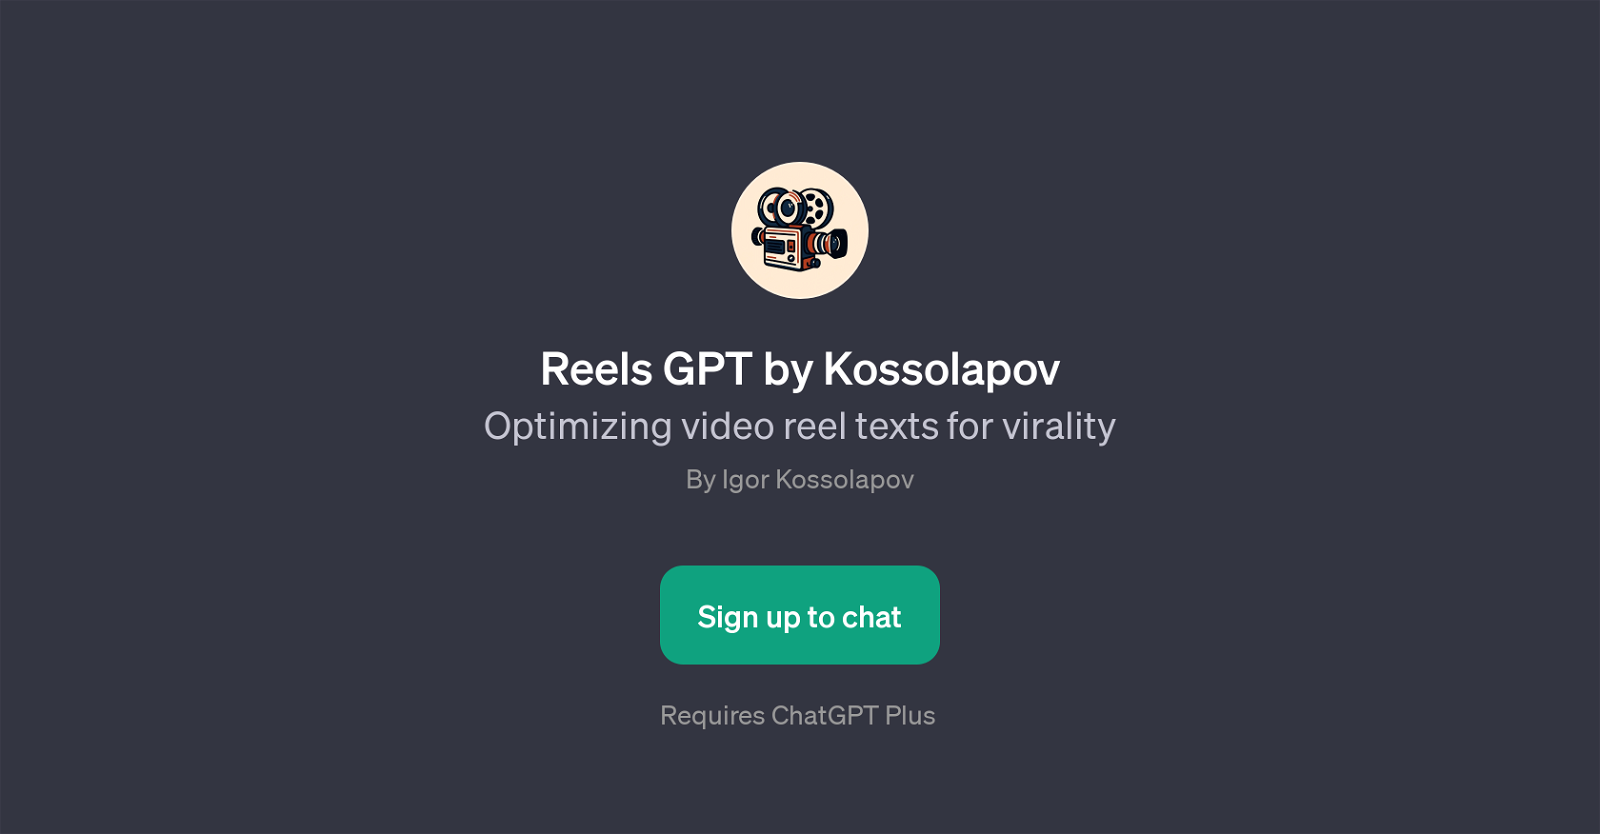 Reels GPT by Kossolapov website